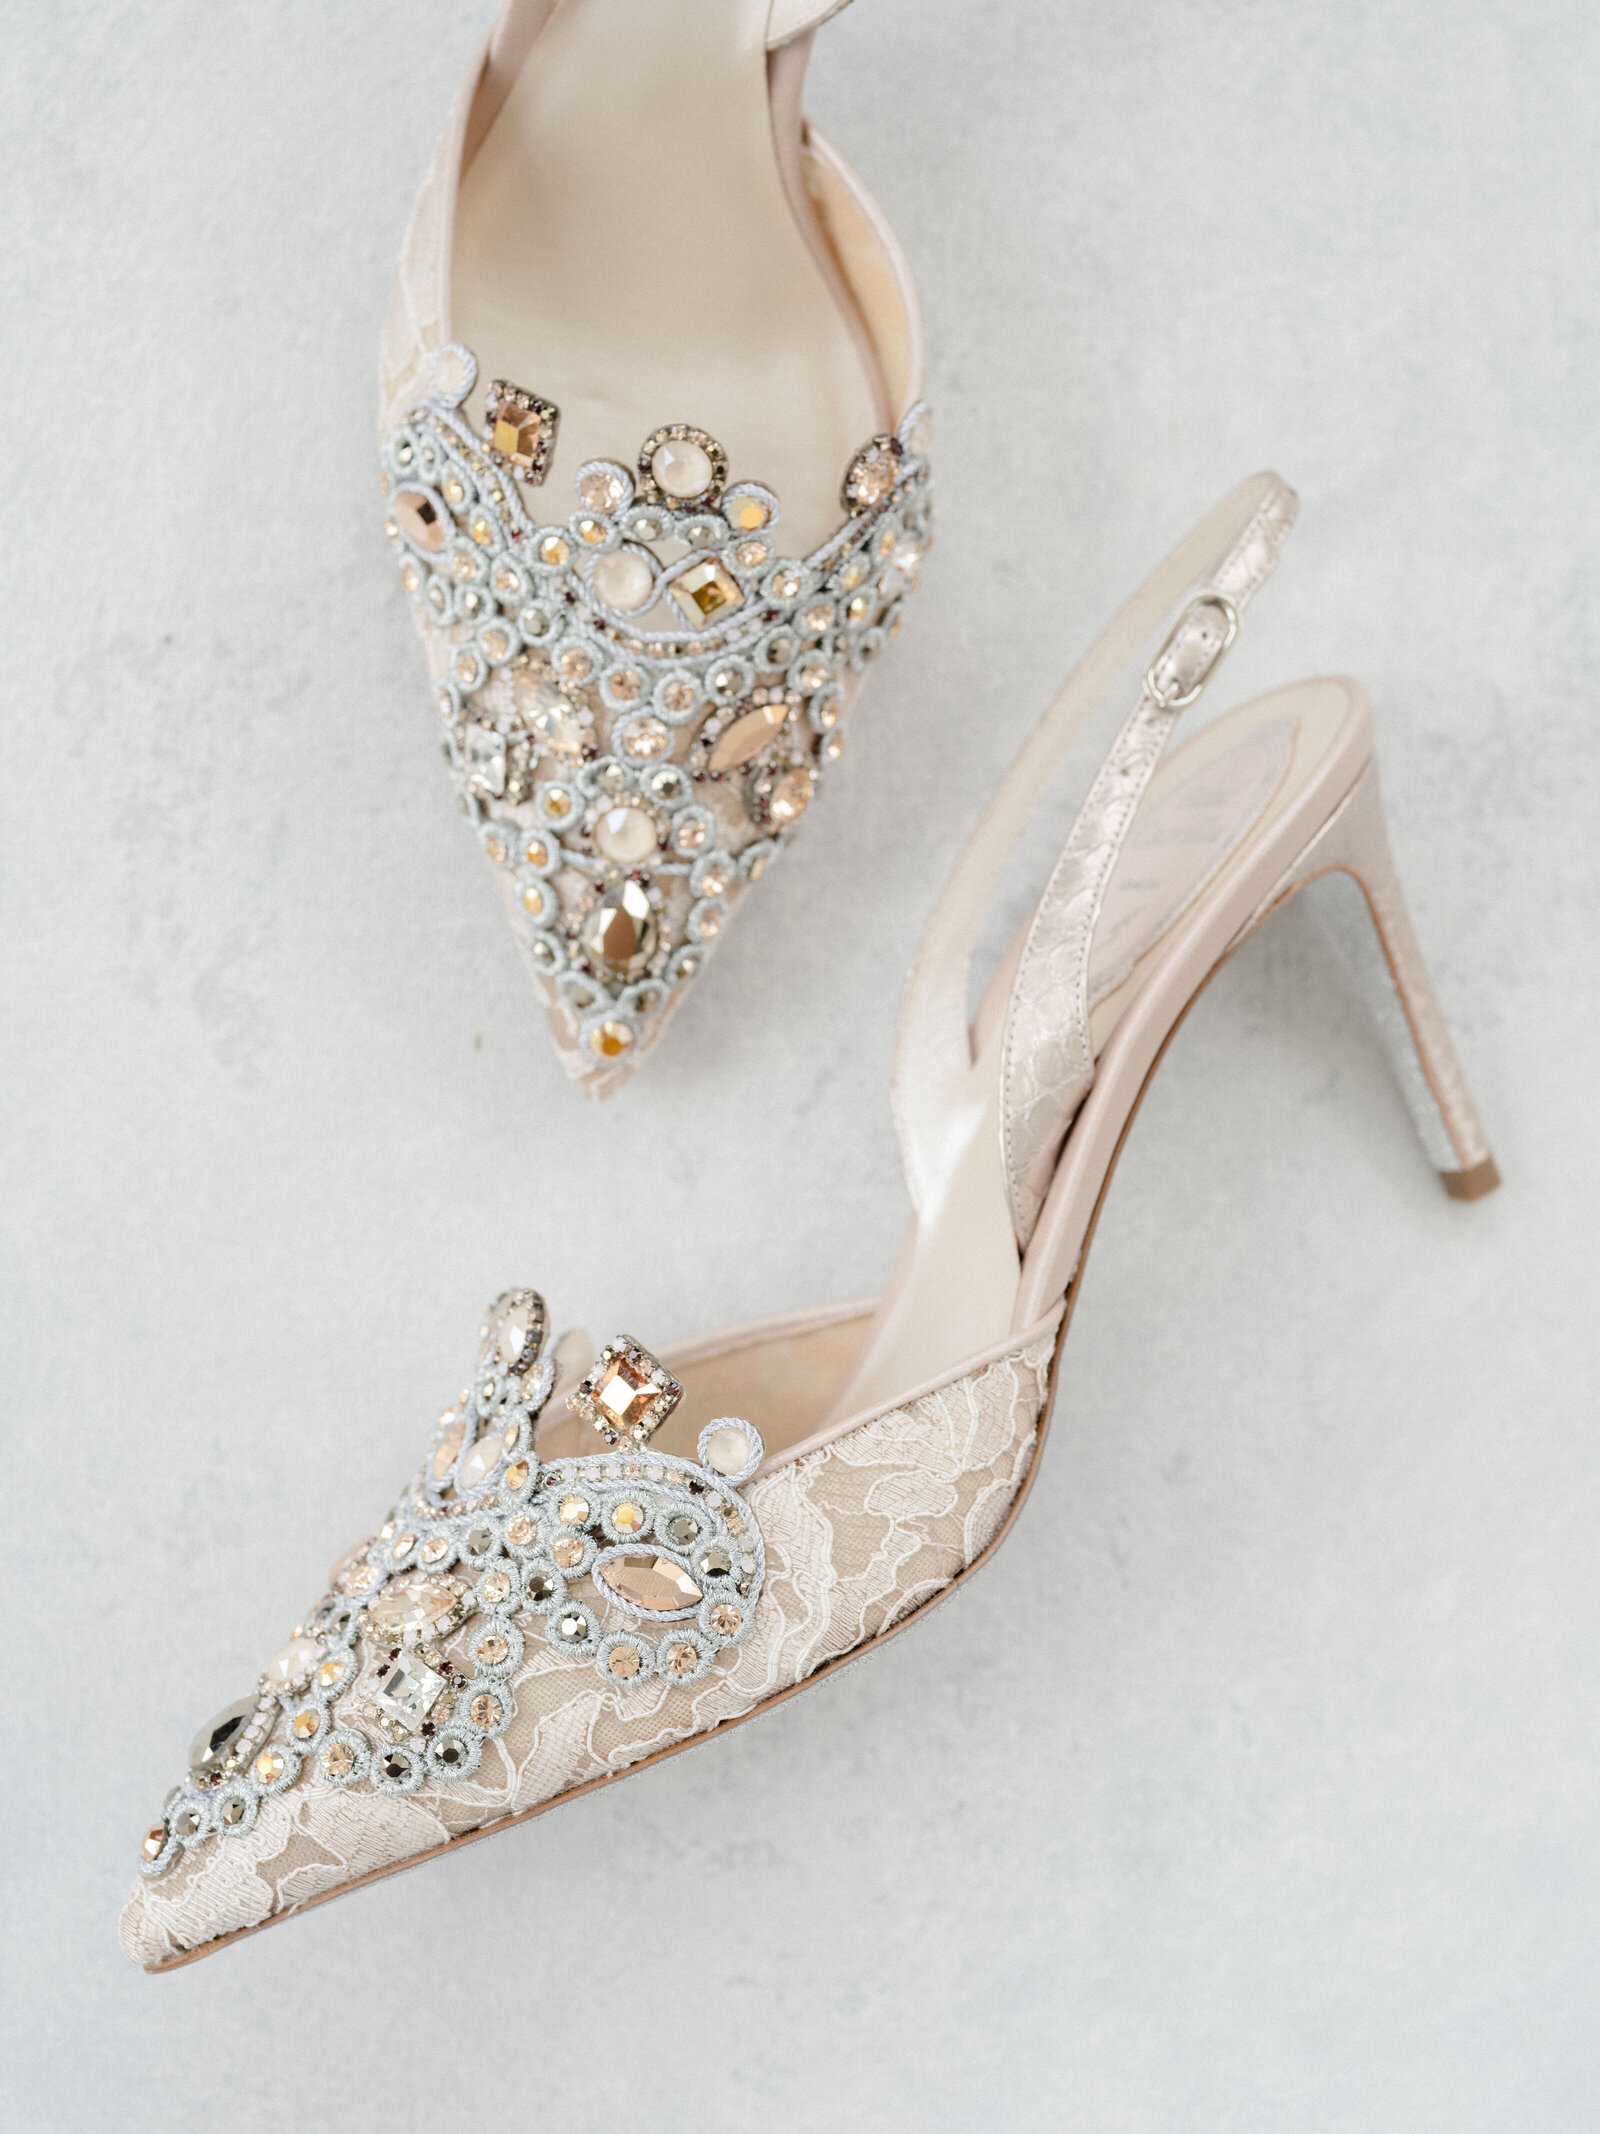 Luxury bridal shoes for Charleston SC wedding photographed by wedding photographers in Charleston Amy Mulder Photography